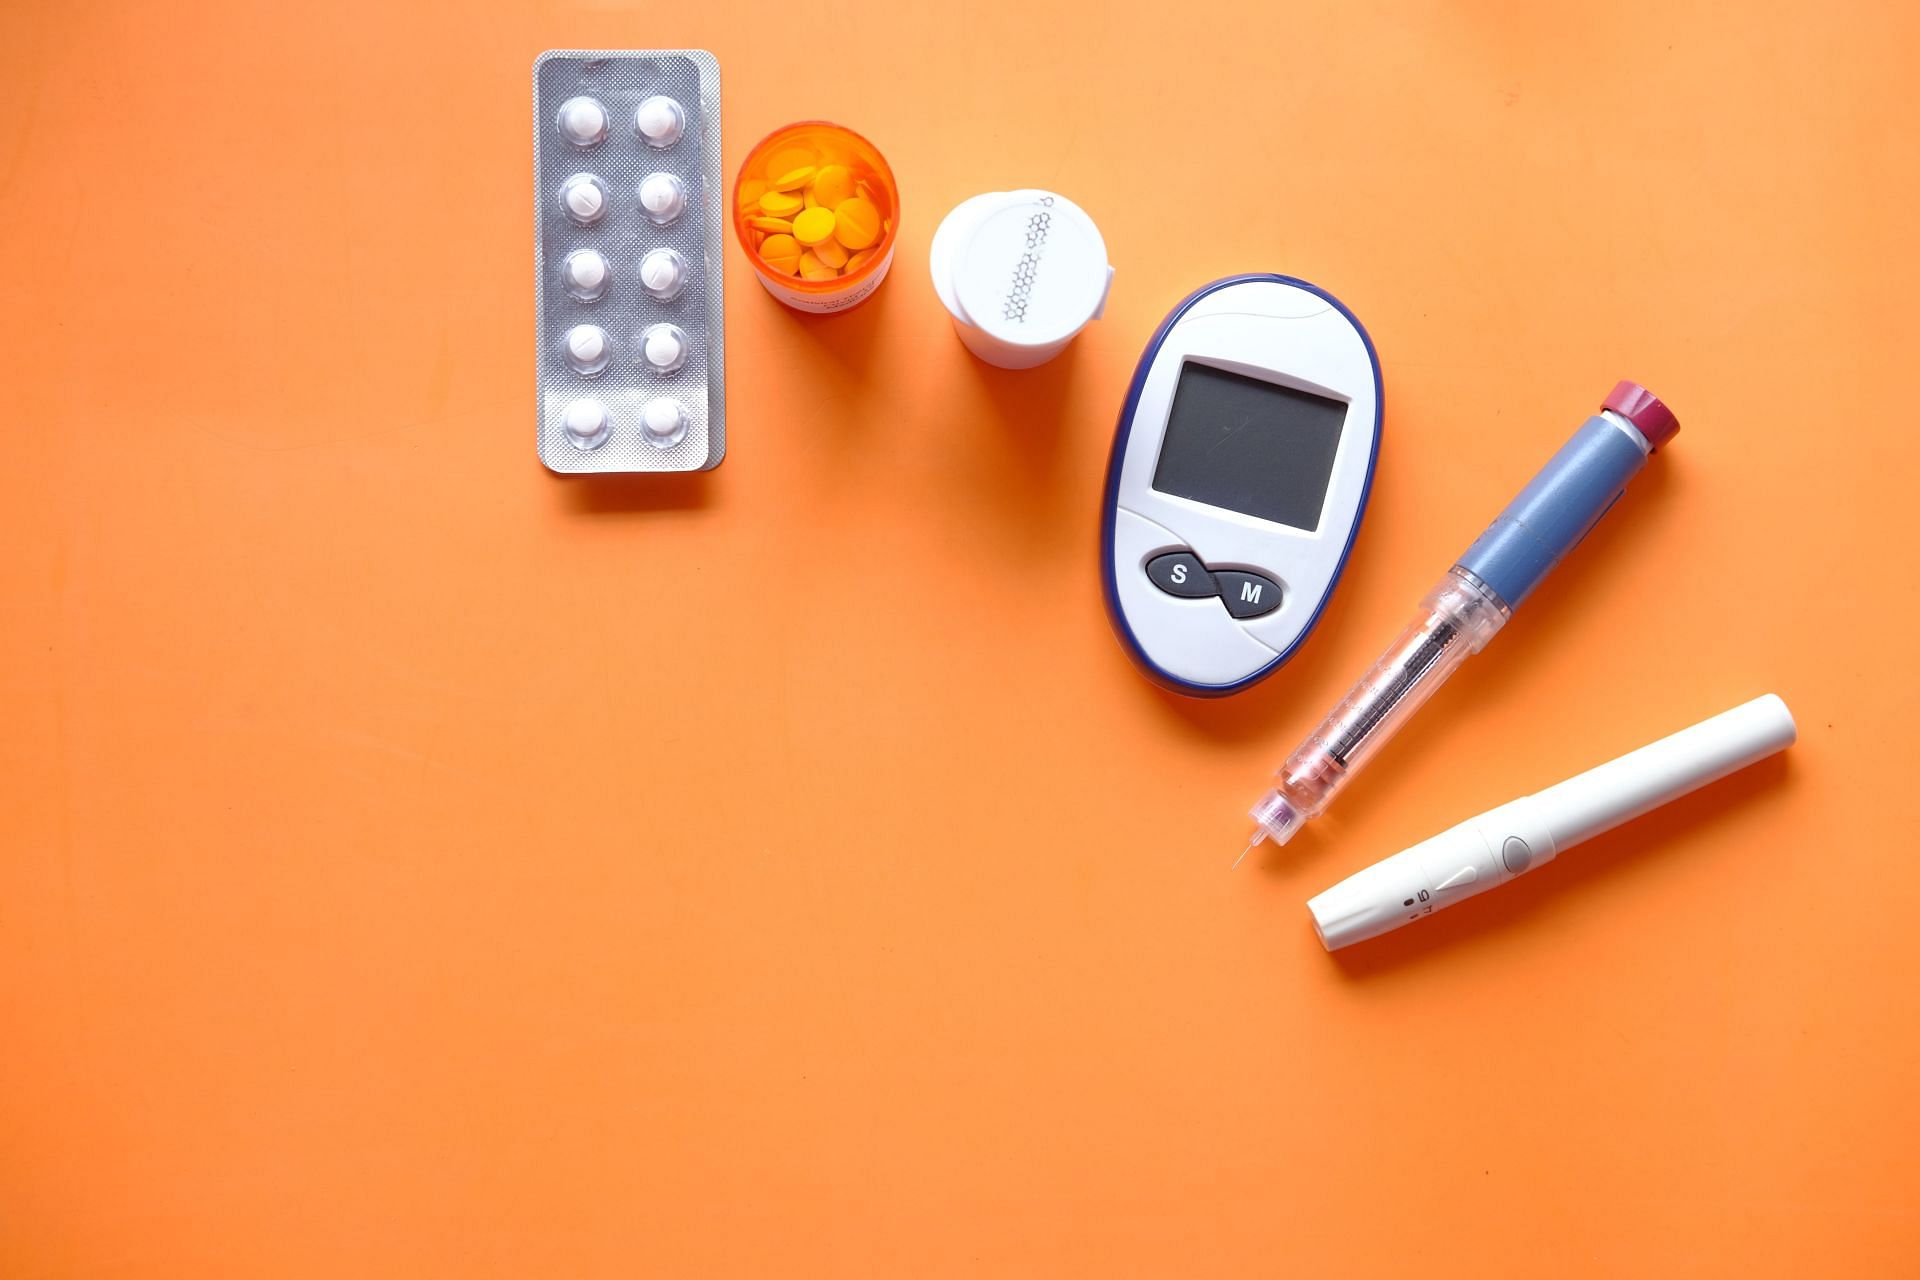 High blood glucose levels are among the symptoms of diabetes. (Image via Unsplash/Towfiqu Barbhuiya)